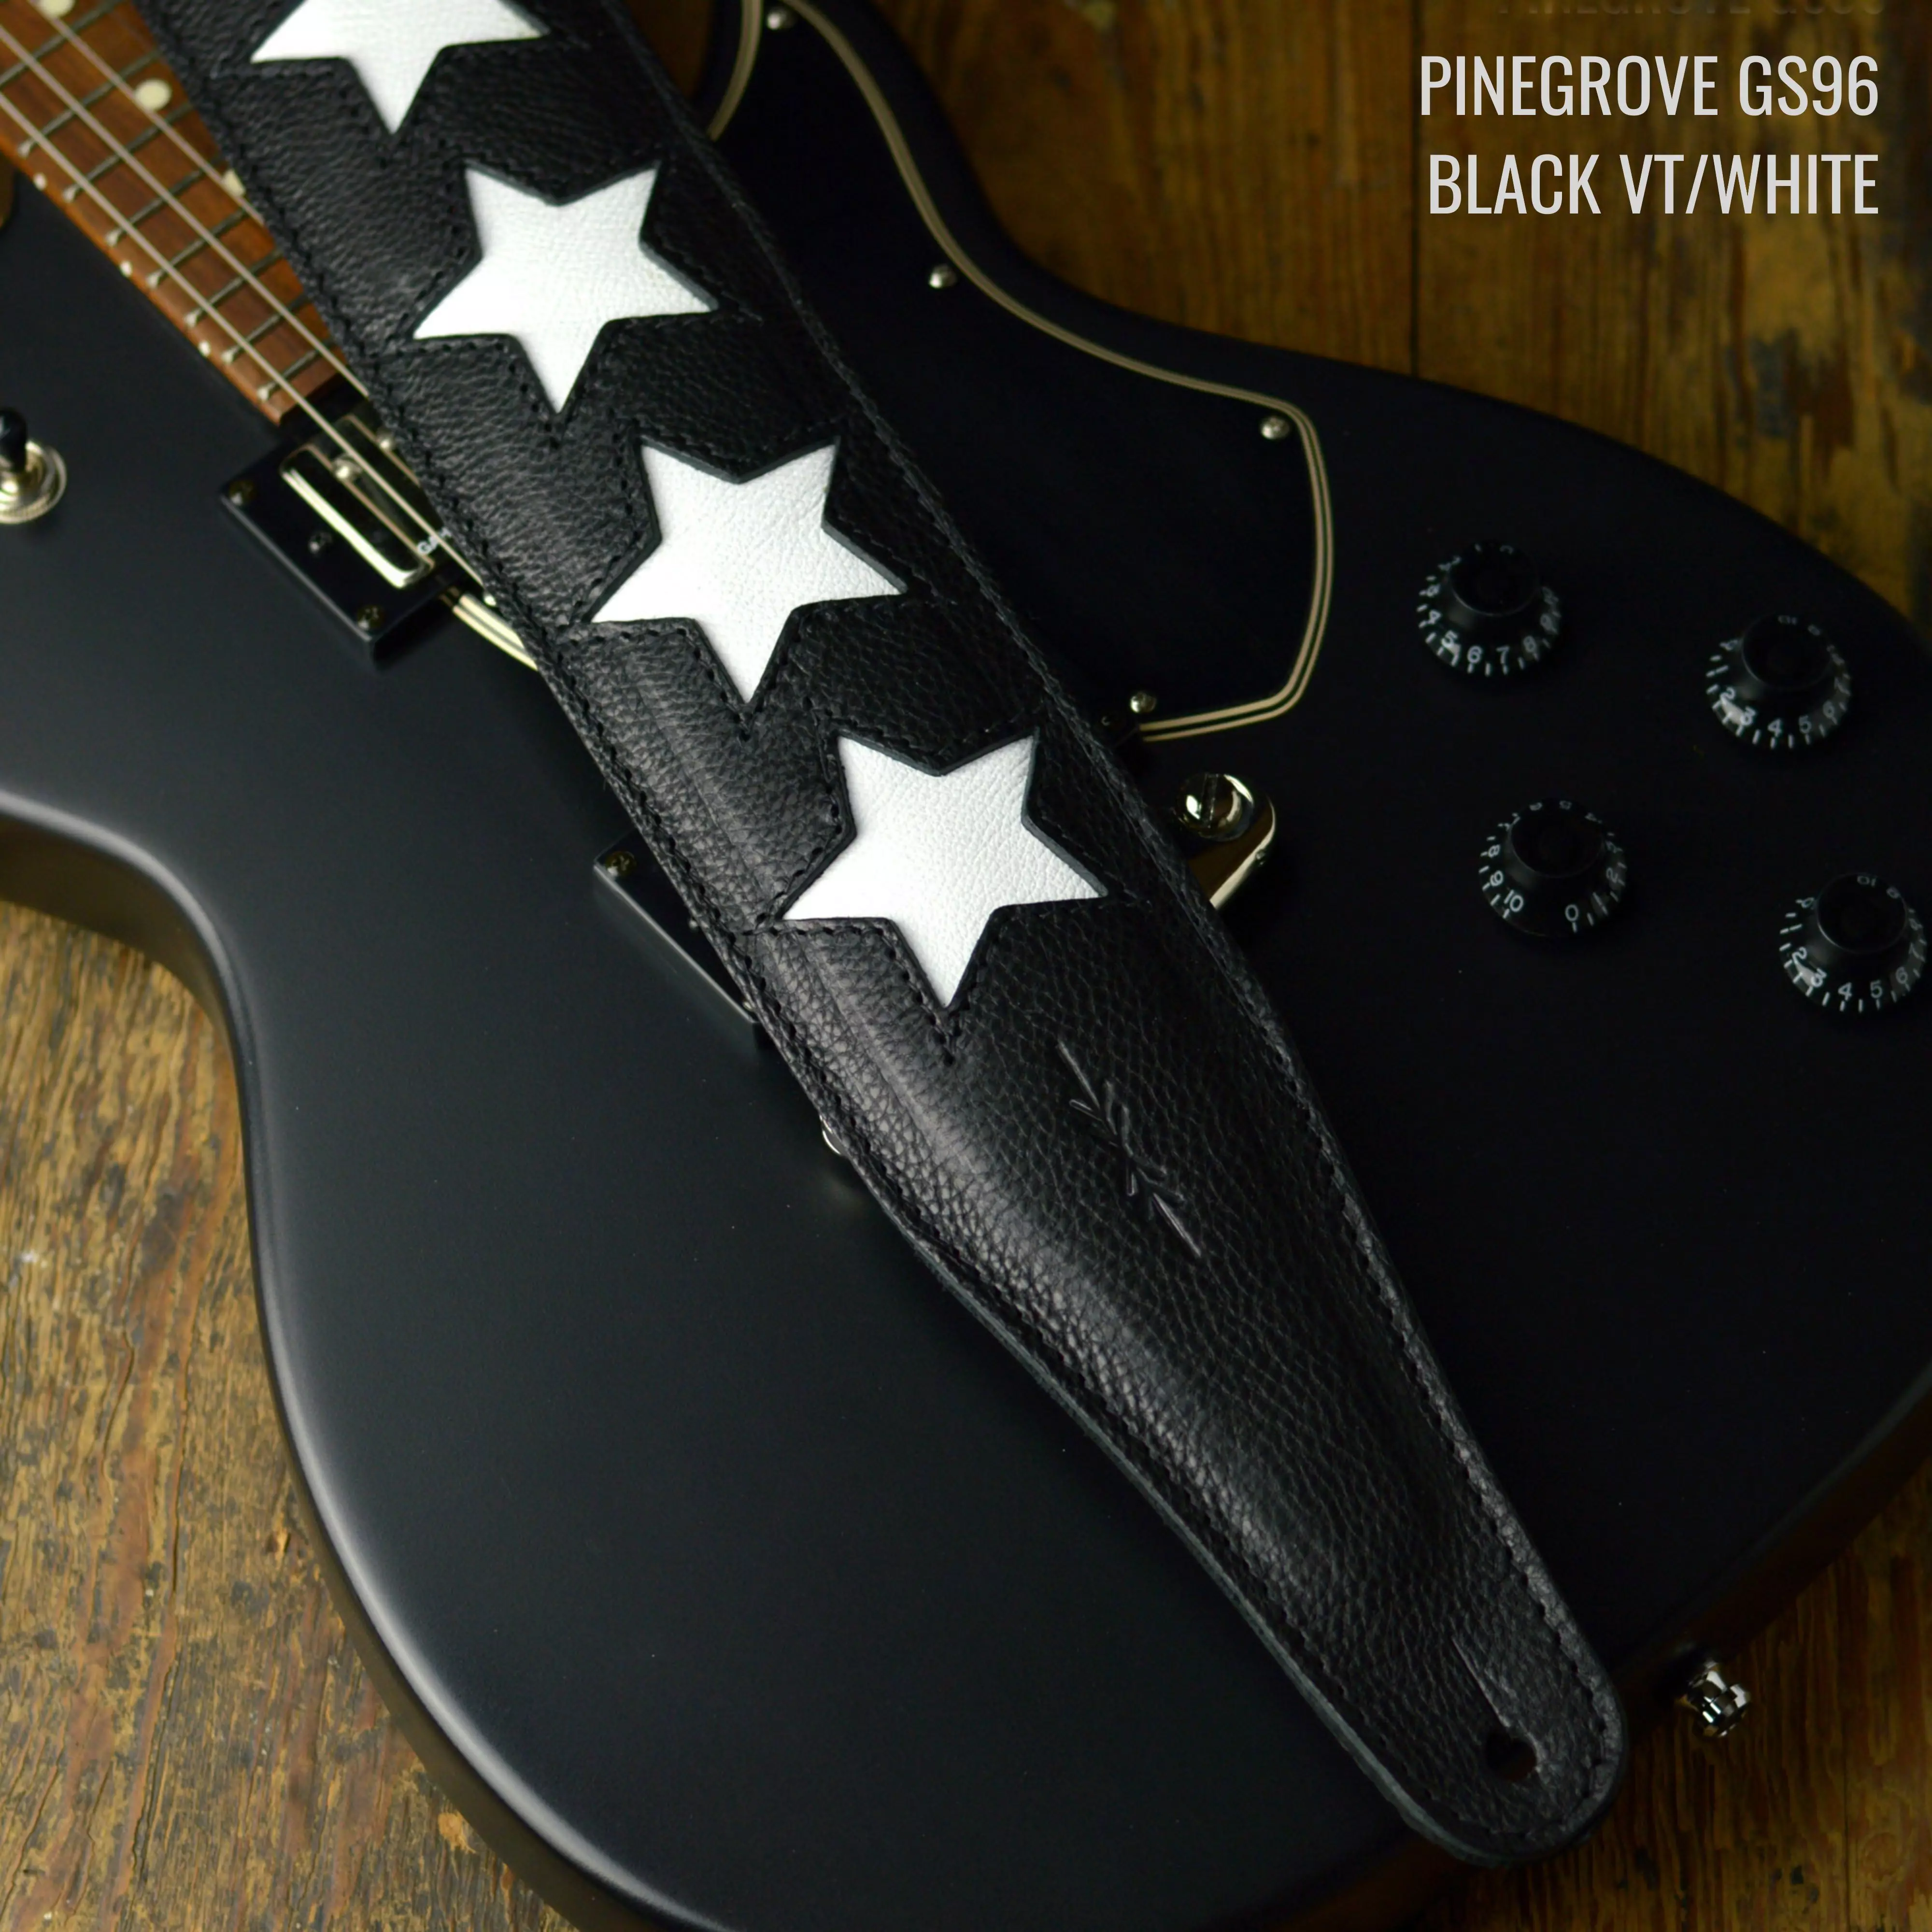 Pinegrove GS96 black white guitar strap ANNO DSC_0368.jpg